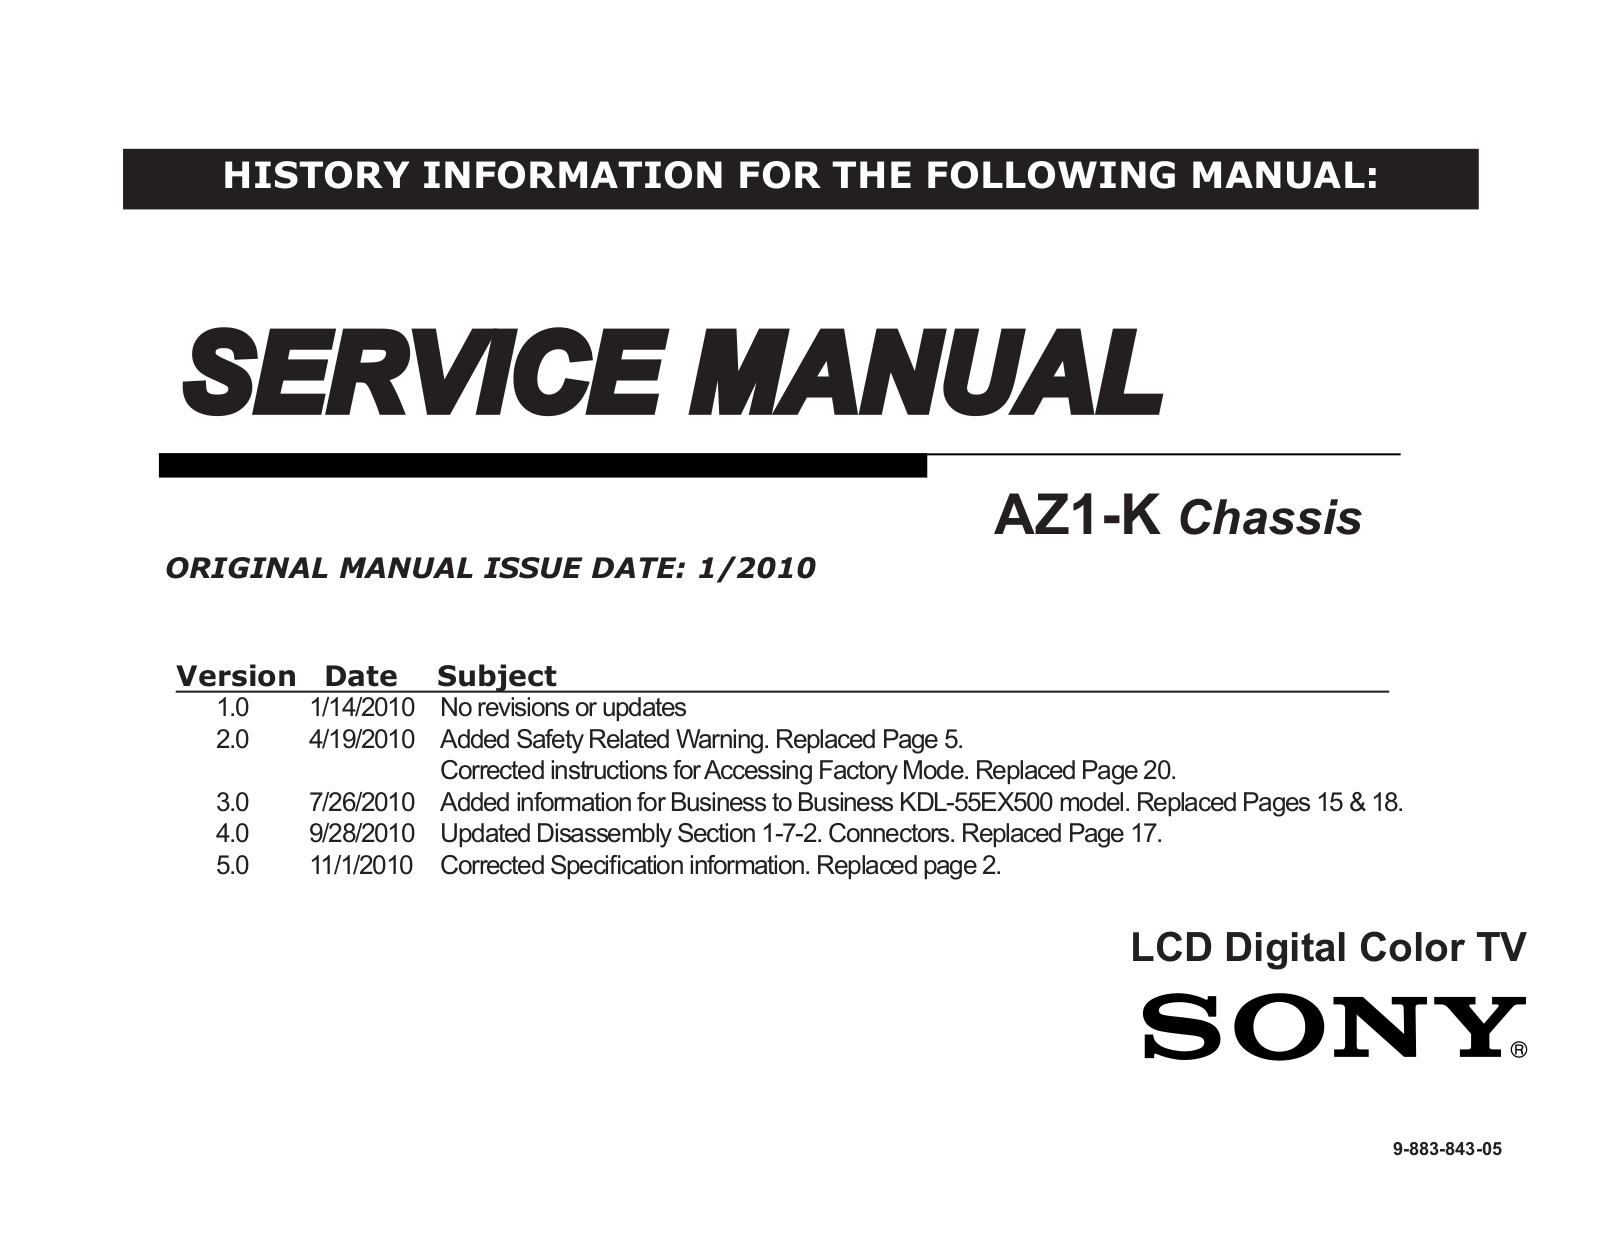 Sony AZ1-K Service Manual